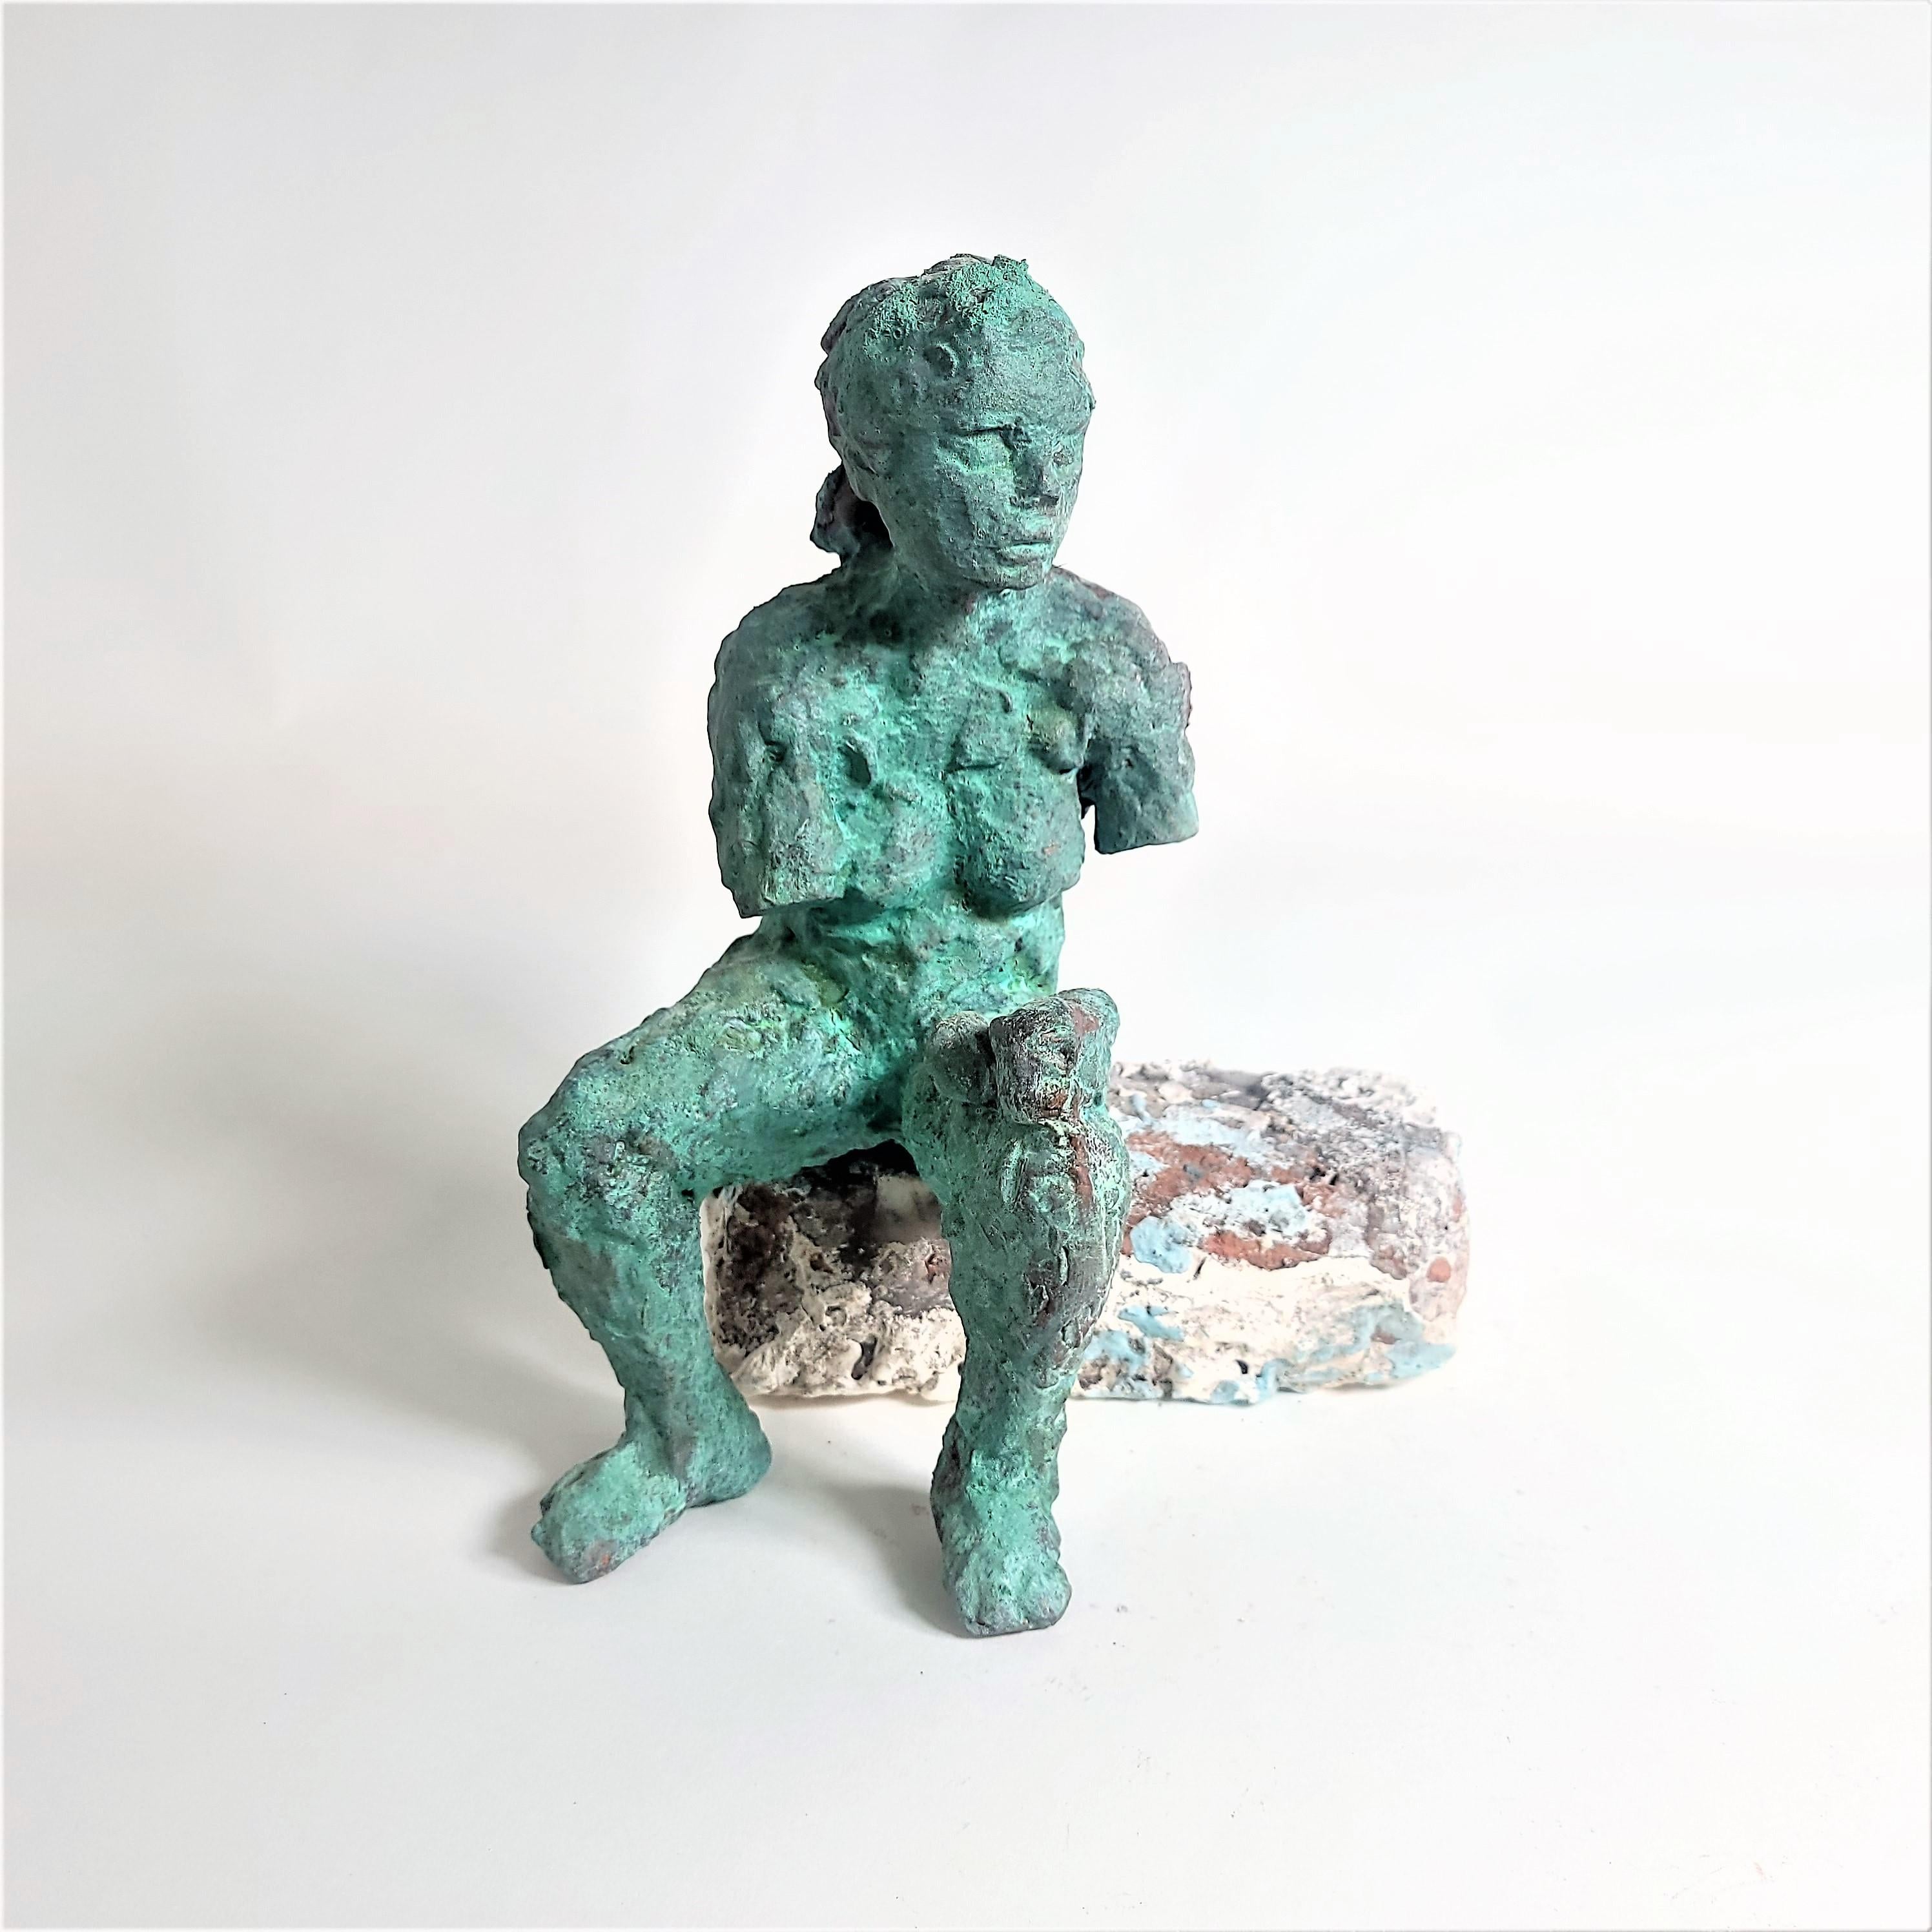 George Petrides Nude Sculpture - "Tara Sitting" Nude Figurative Sculpture, Green, Copper